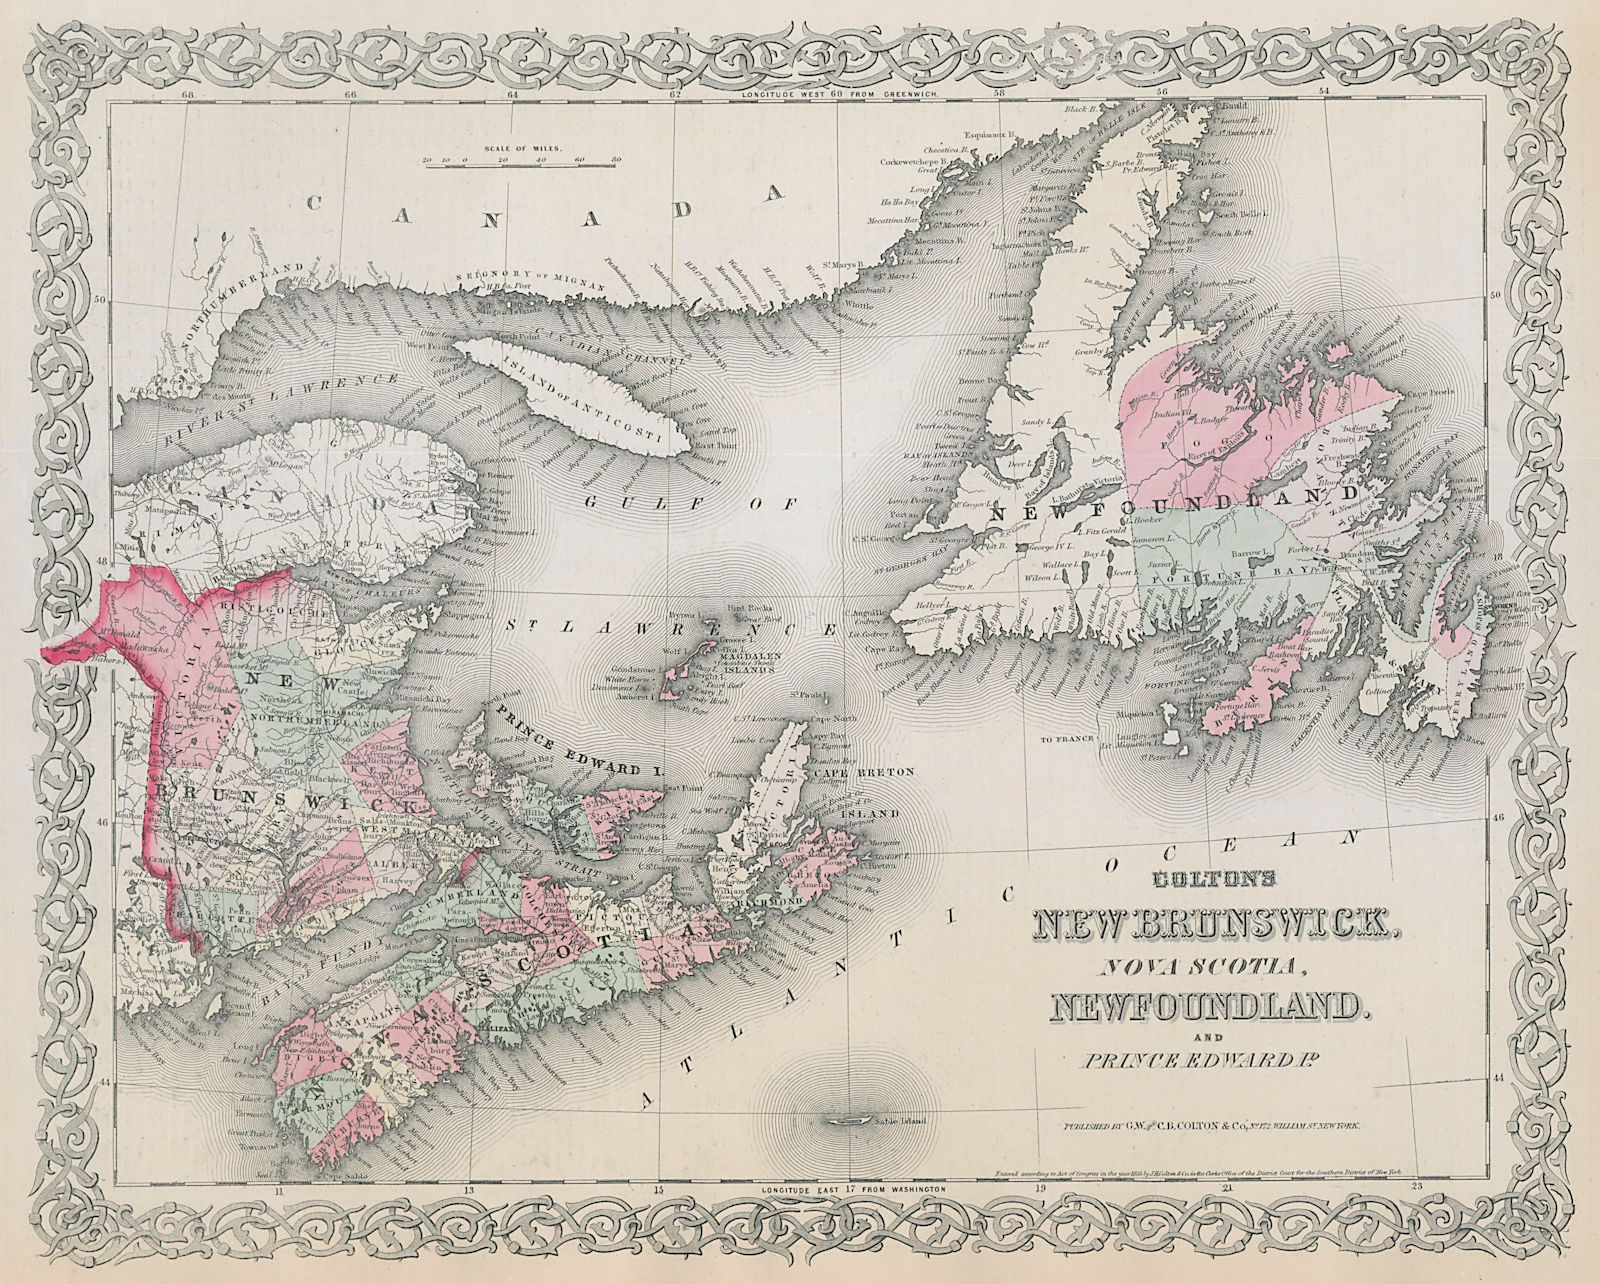 Associate Product Colton's New Brunswick, Nova Scotia, Newfoundland & Prince Edward Is. 1869 map